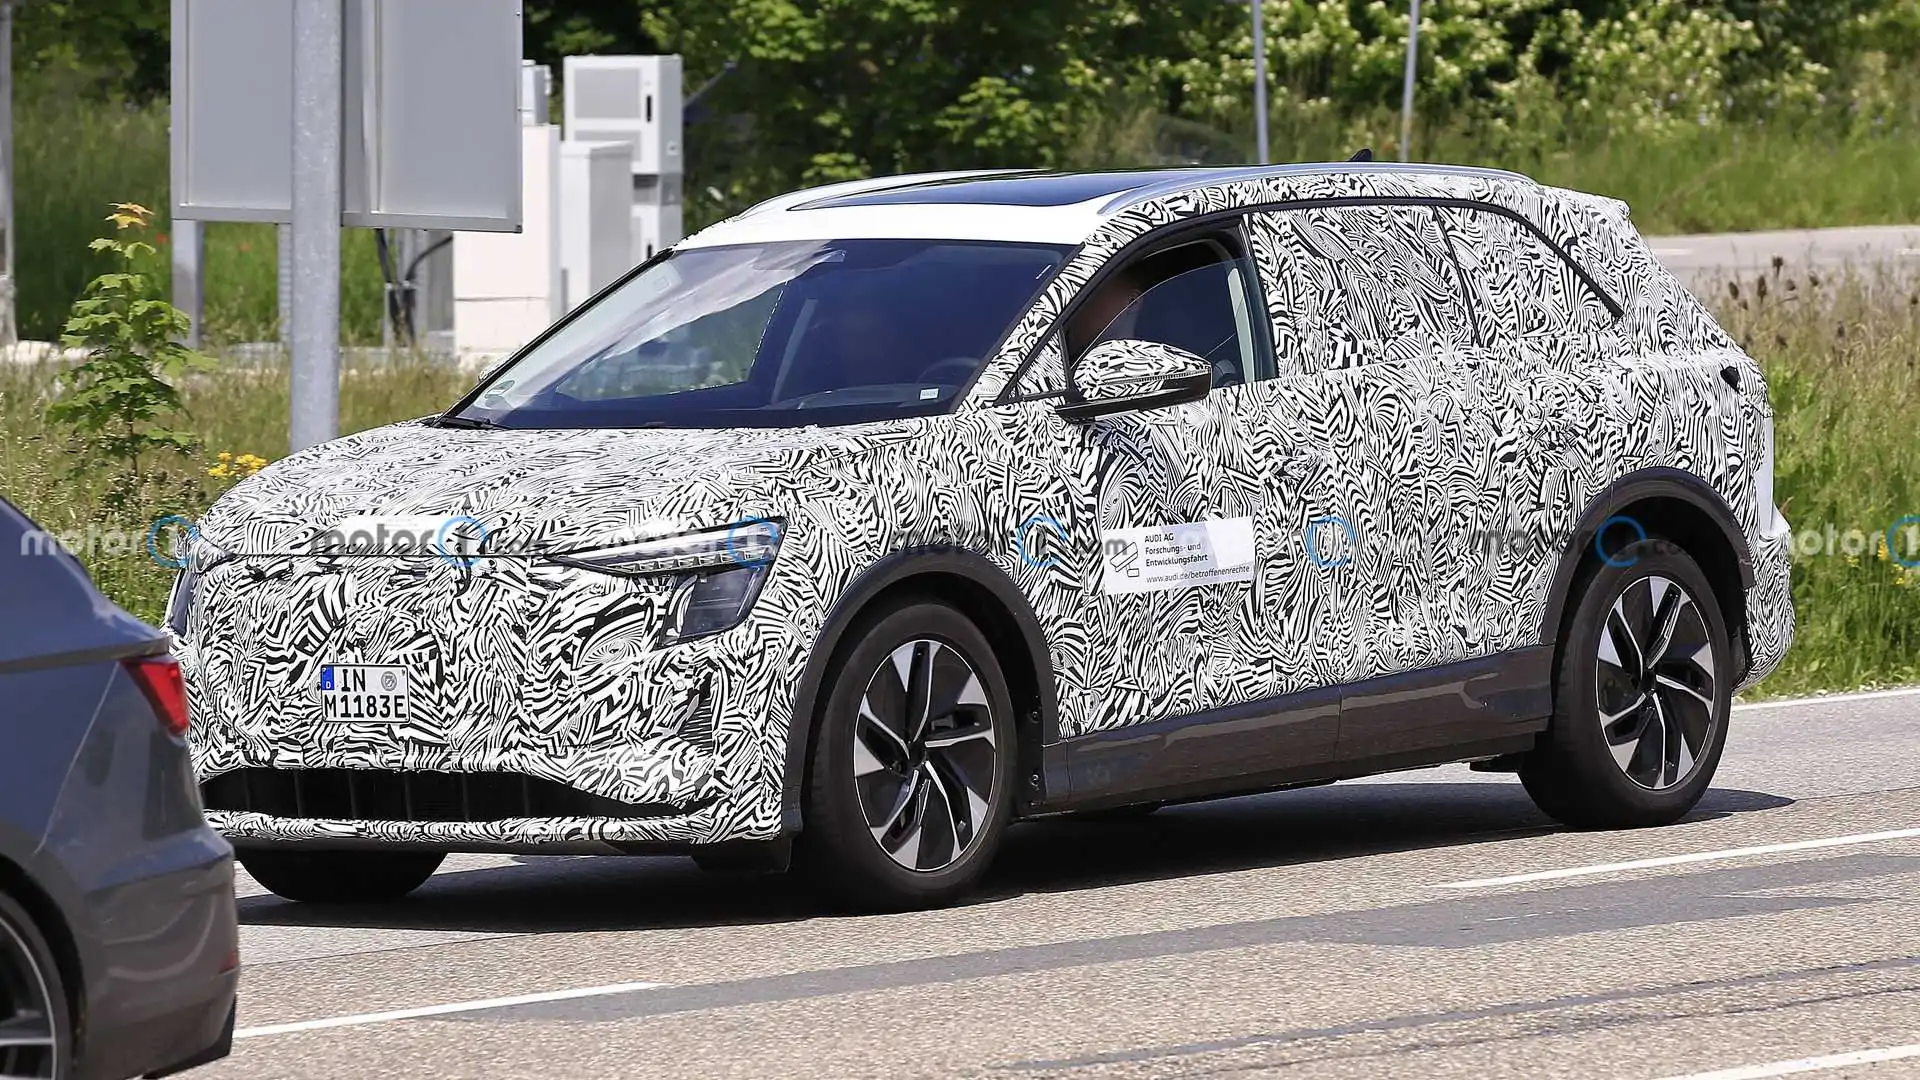 Audi's medium-sized electric SUV begins road testing in Germany.